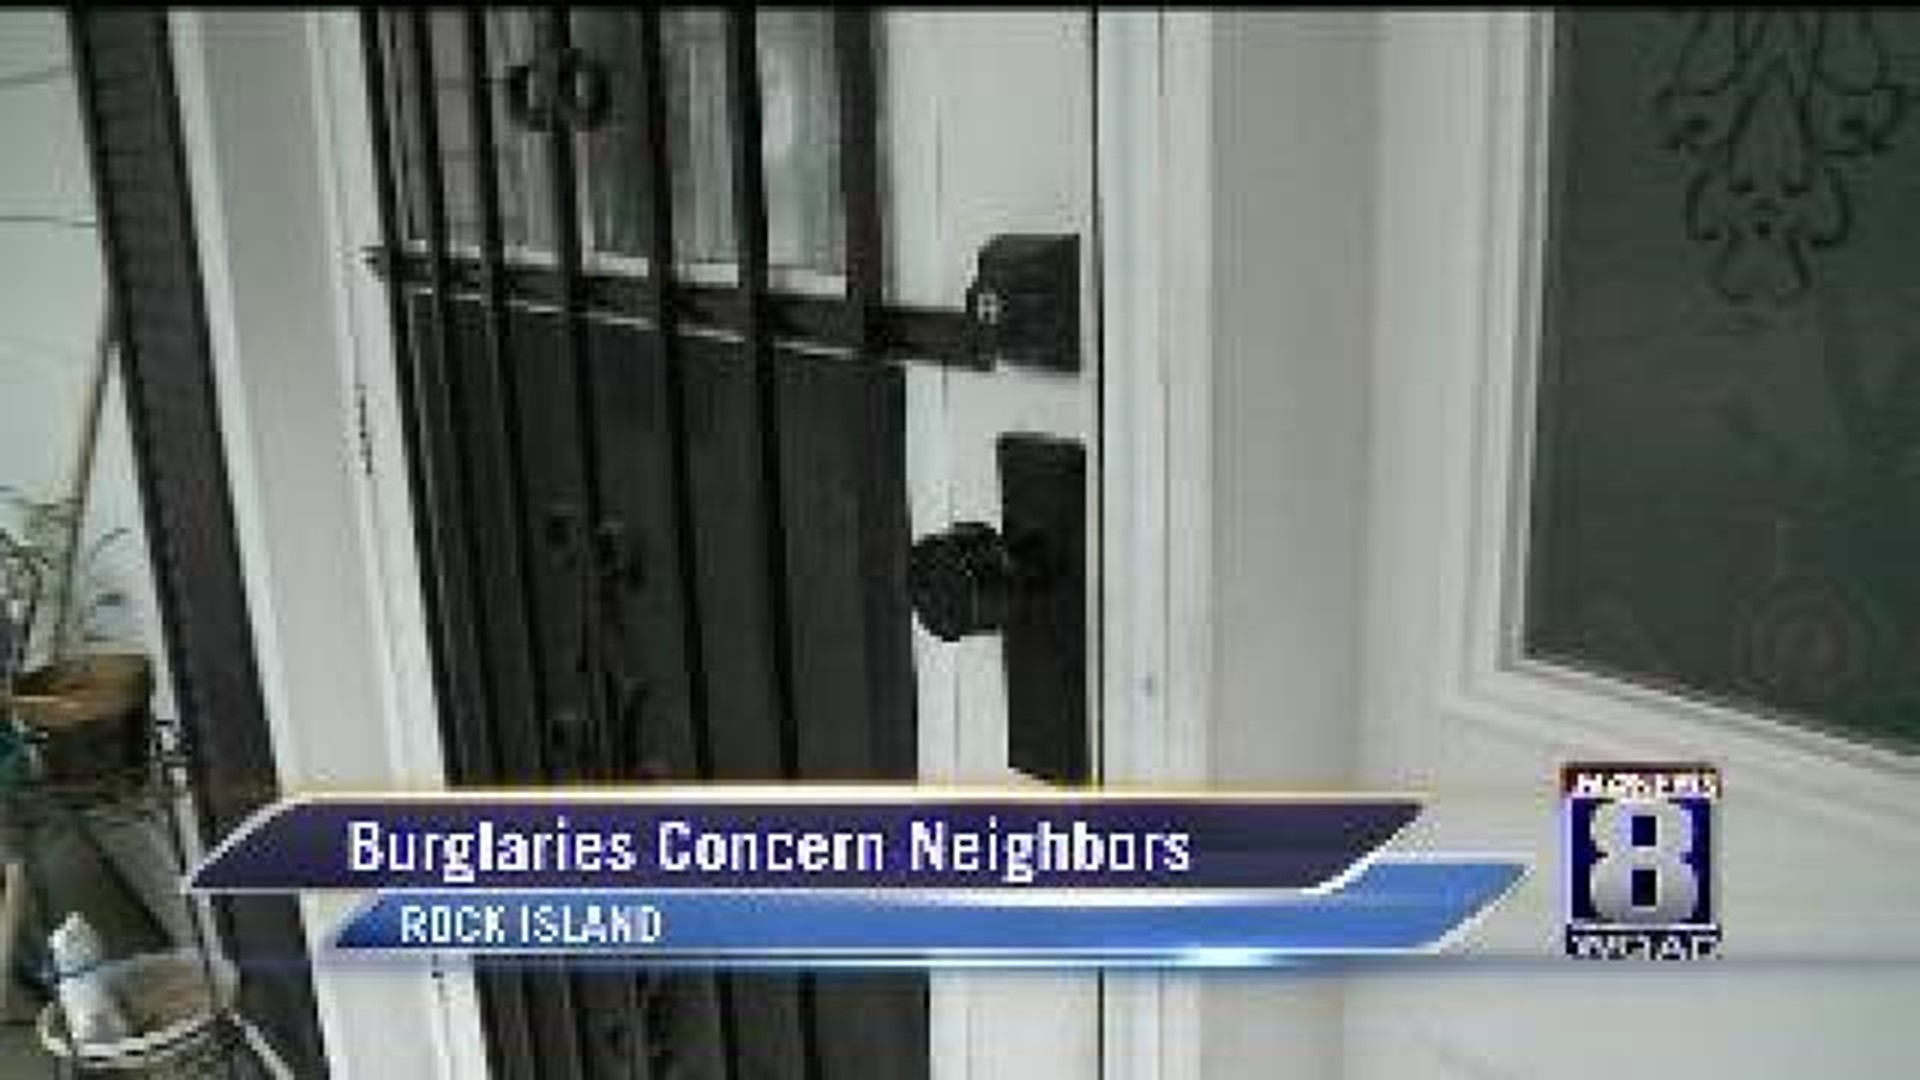 Burglaries Concern Neighborhood